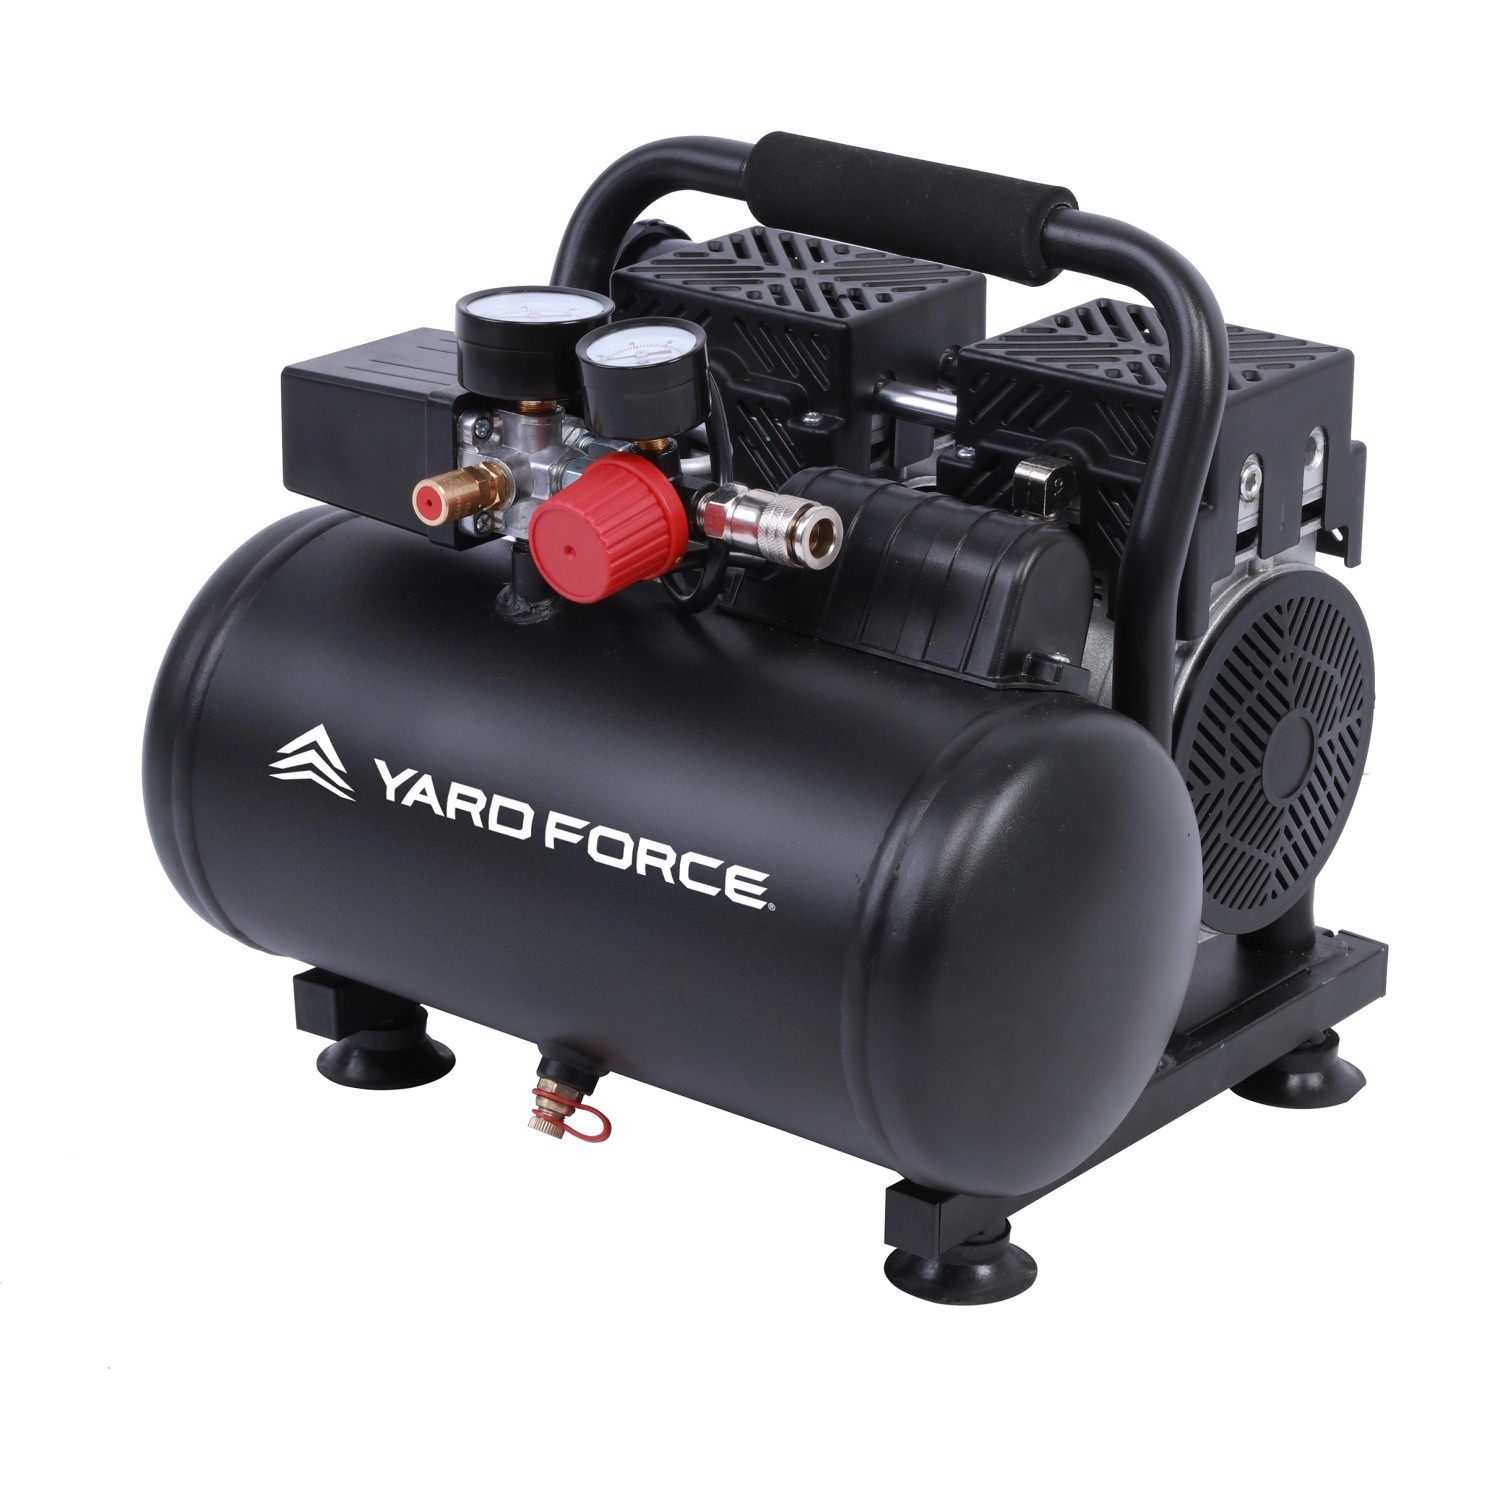 Yard Force Leisekompressor EX ARC06 max. 8 Bar Betriebsdruck 550 W kaufen  bei OBI